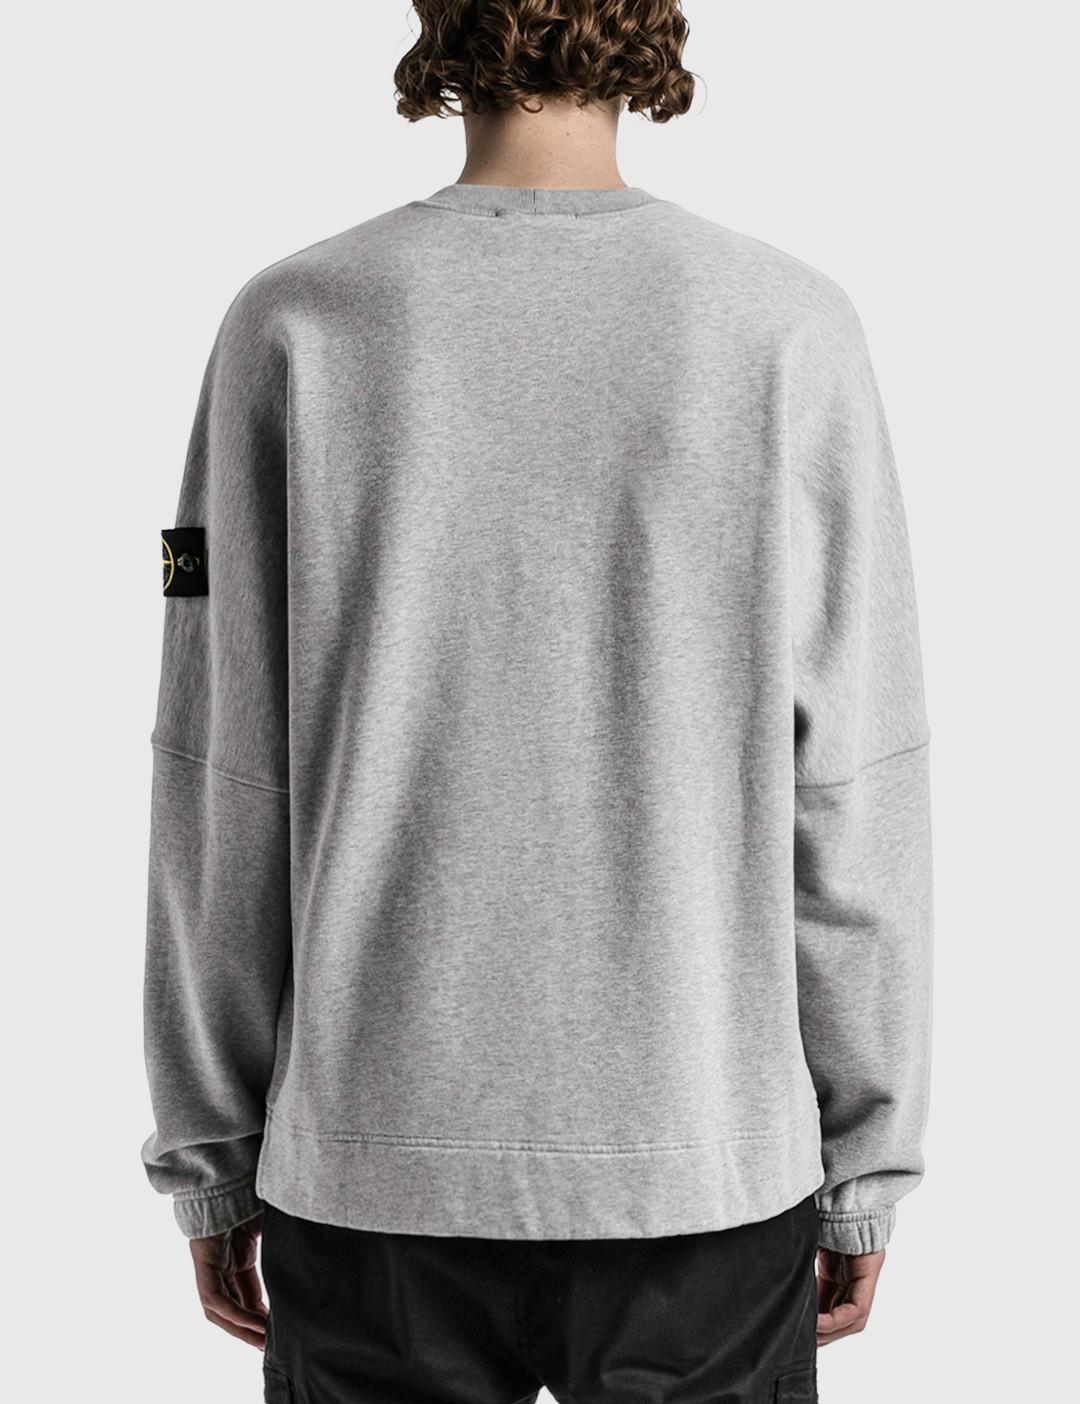 Stone Island Cotton Crewneck Sweatshirt in Gray for Men | Lyst